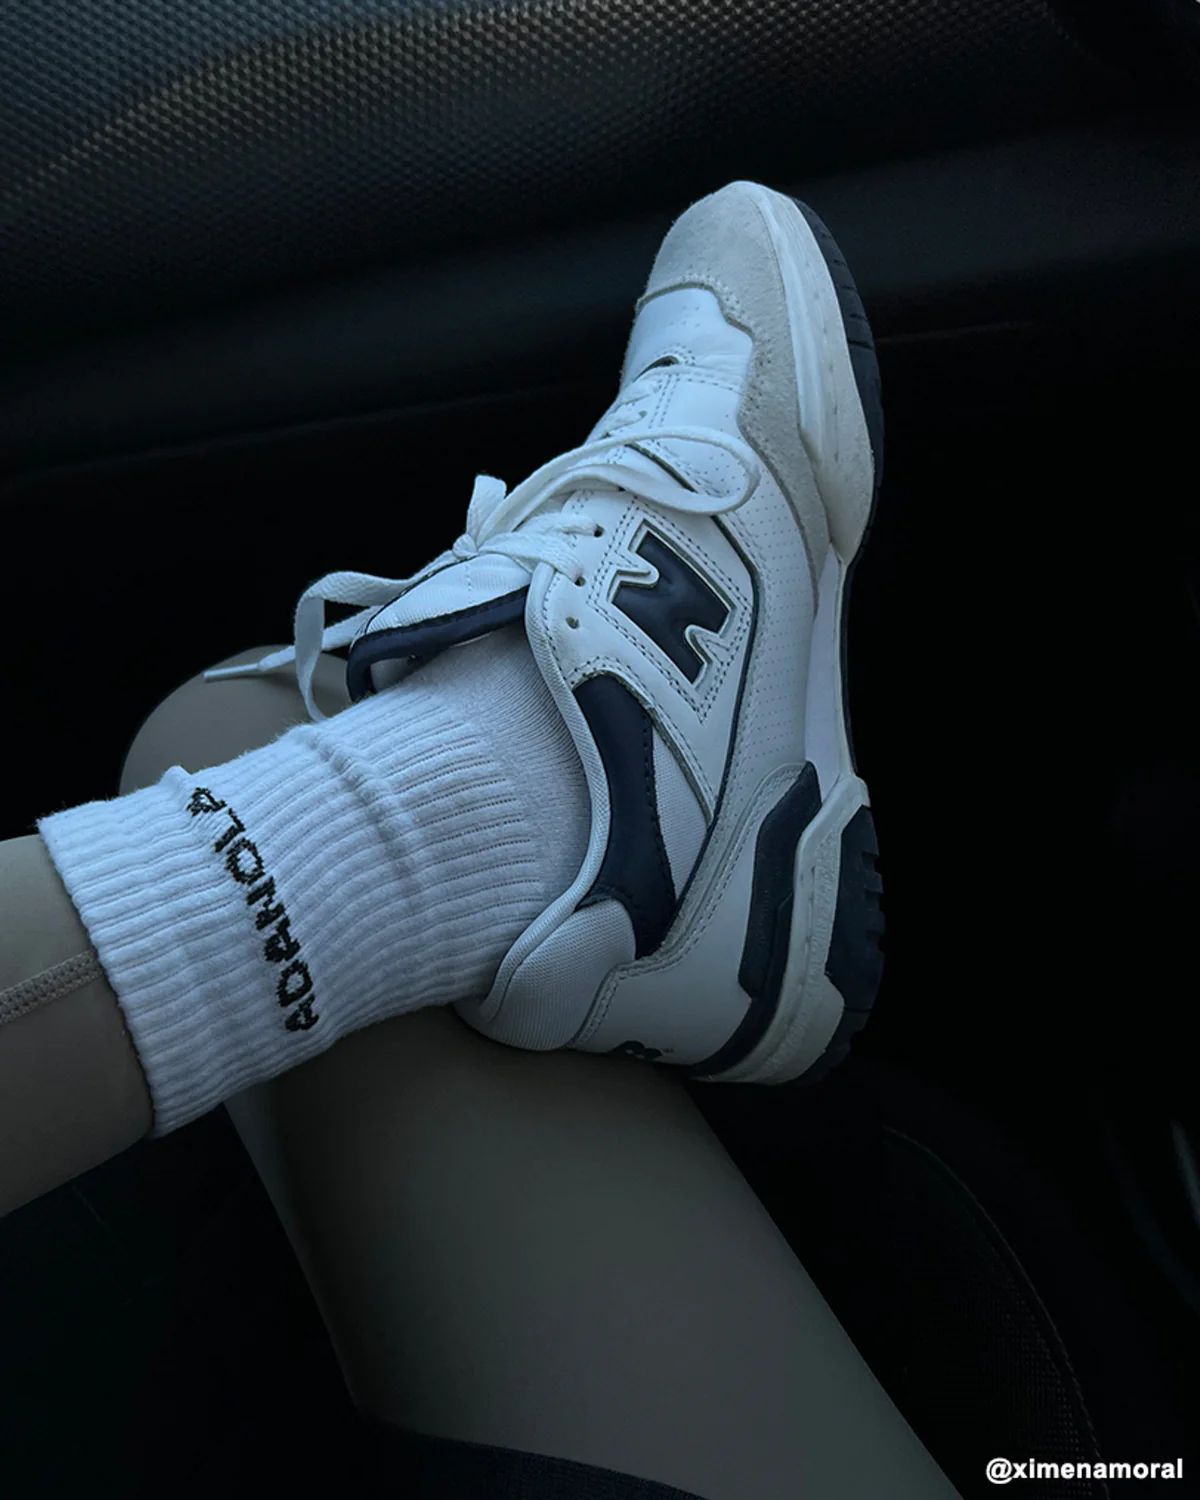 Socks - White | Adanola UK